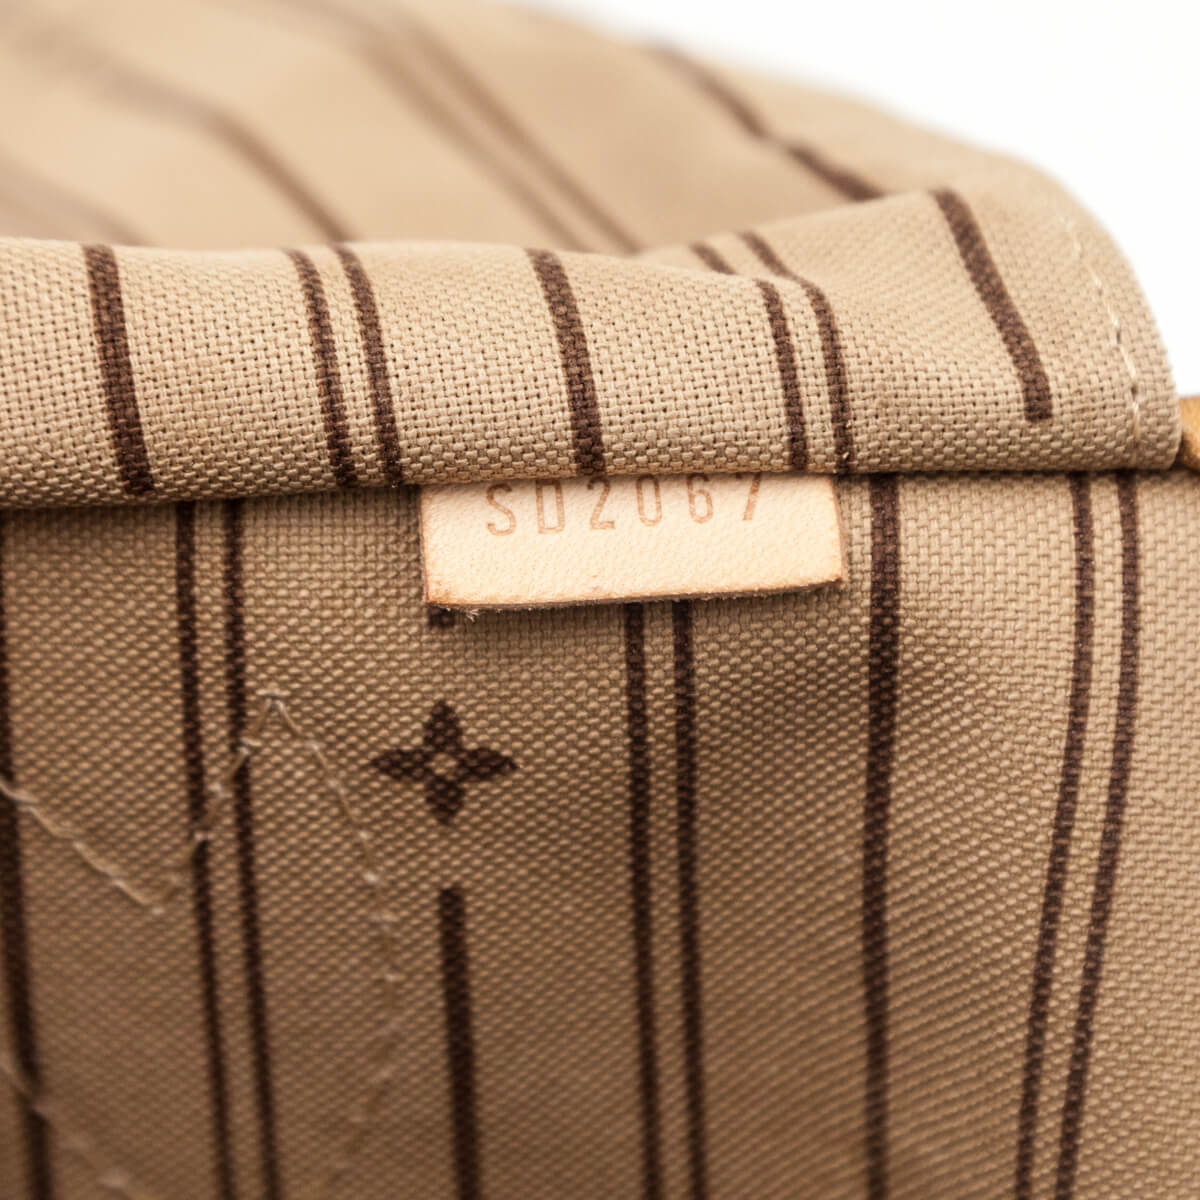 Louis Vuitton Monogram Neverfull GM - Love that Bag etc - Preowned Authentic Designer Handbags & Preloved Fashions